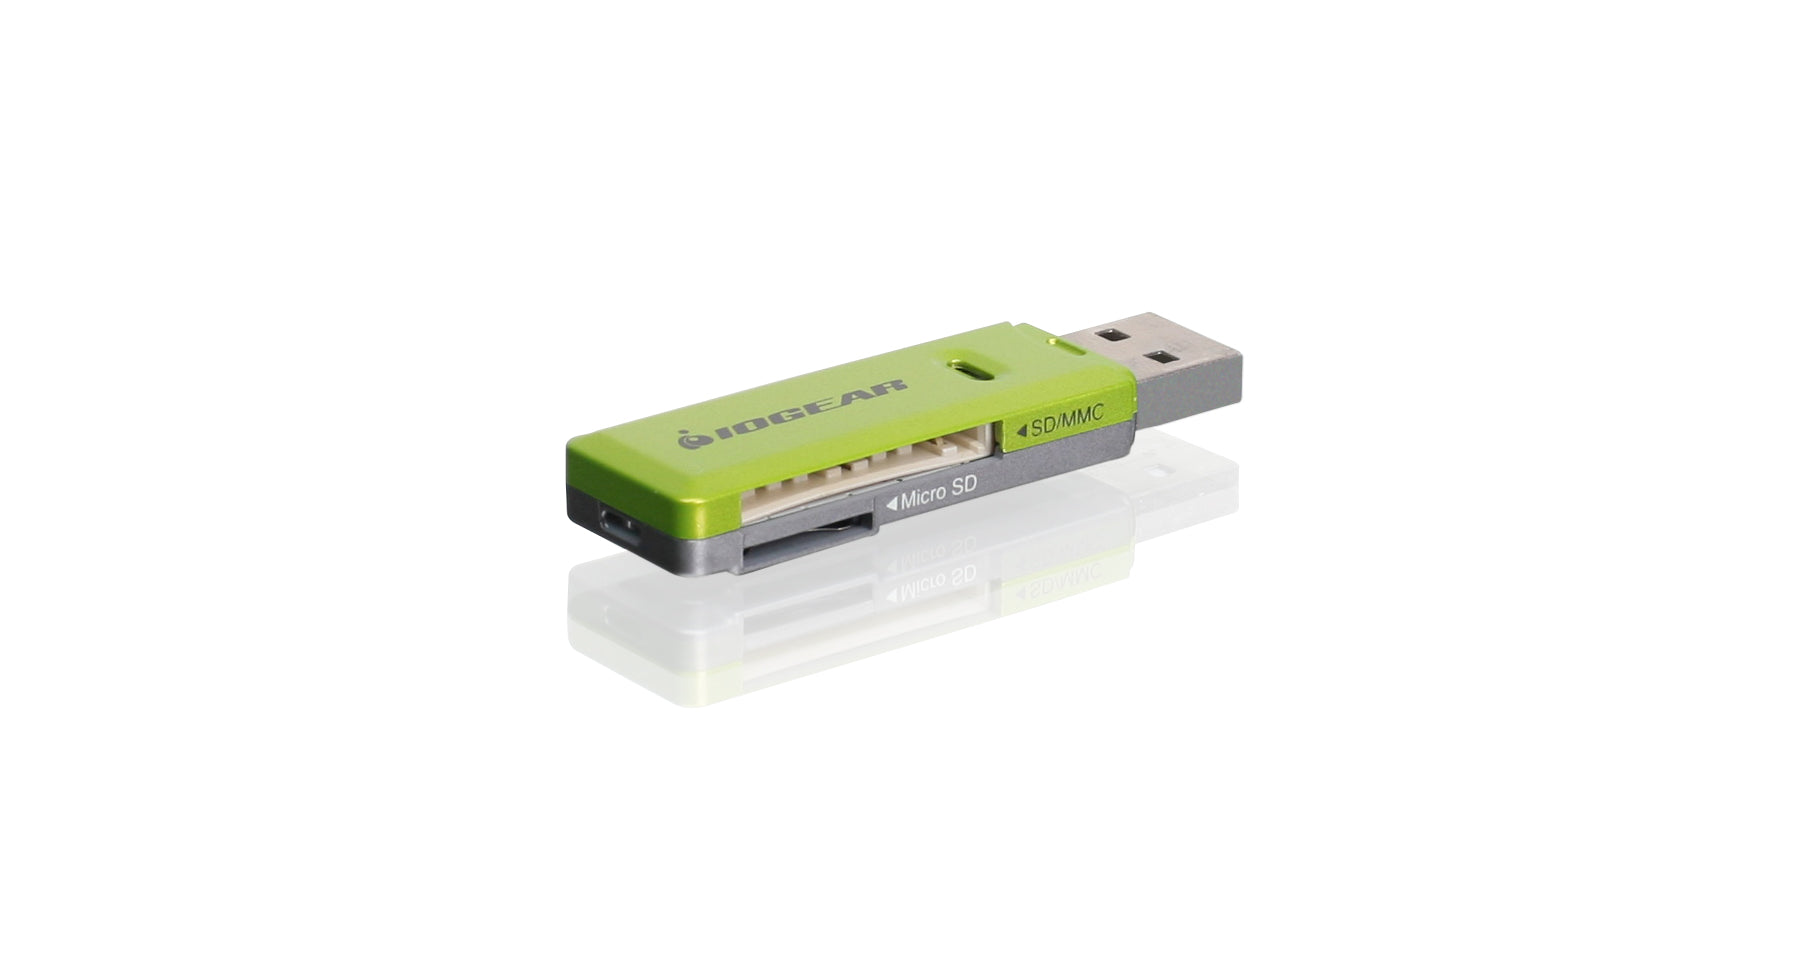 USB 2.0 SD Portable Card Reader Dual Slot SD/Micro SDHC/M2/MS/CF/UHS-I